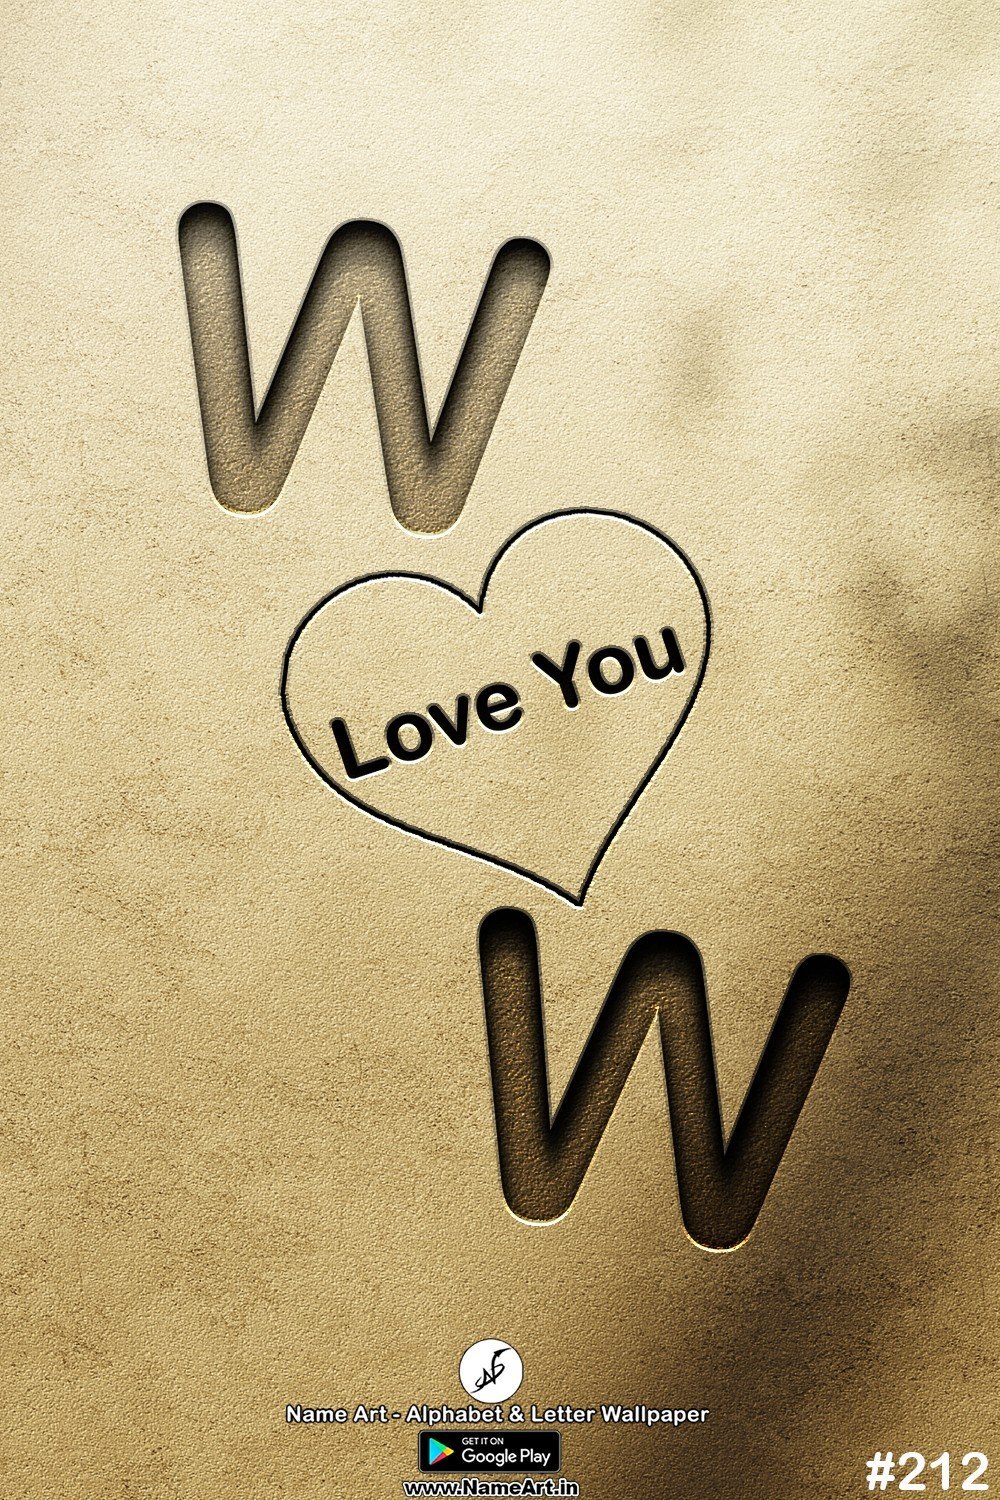 WW | Whatsapp Status DP WW | WW Love Status Cute Couple Whatsapp Status DP !! | New Whatsapp Status DP WW Images |